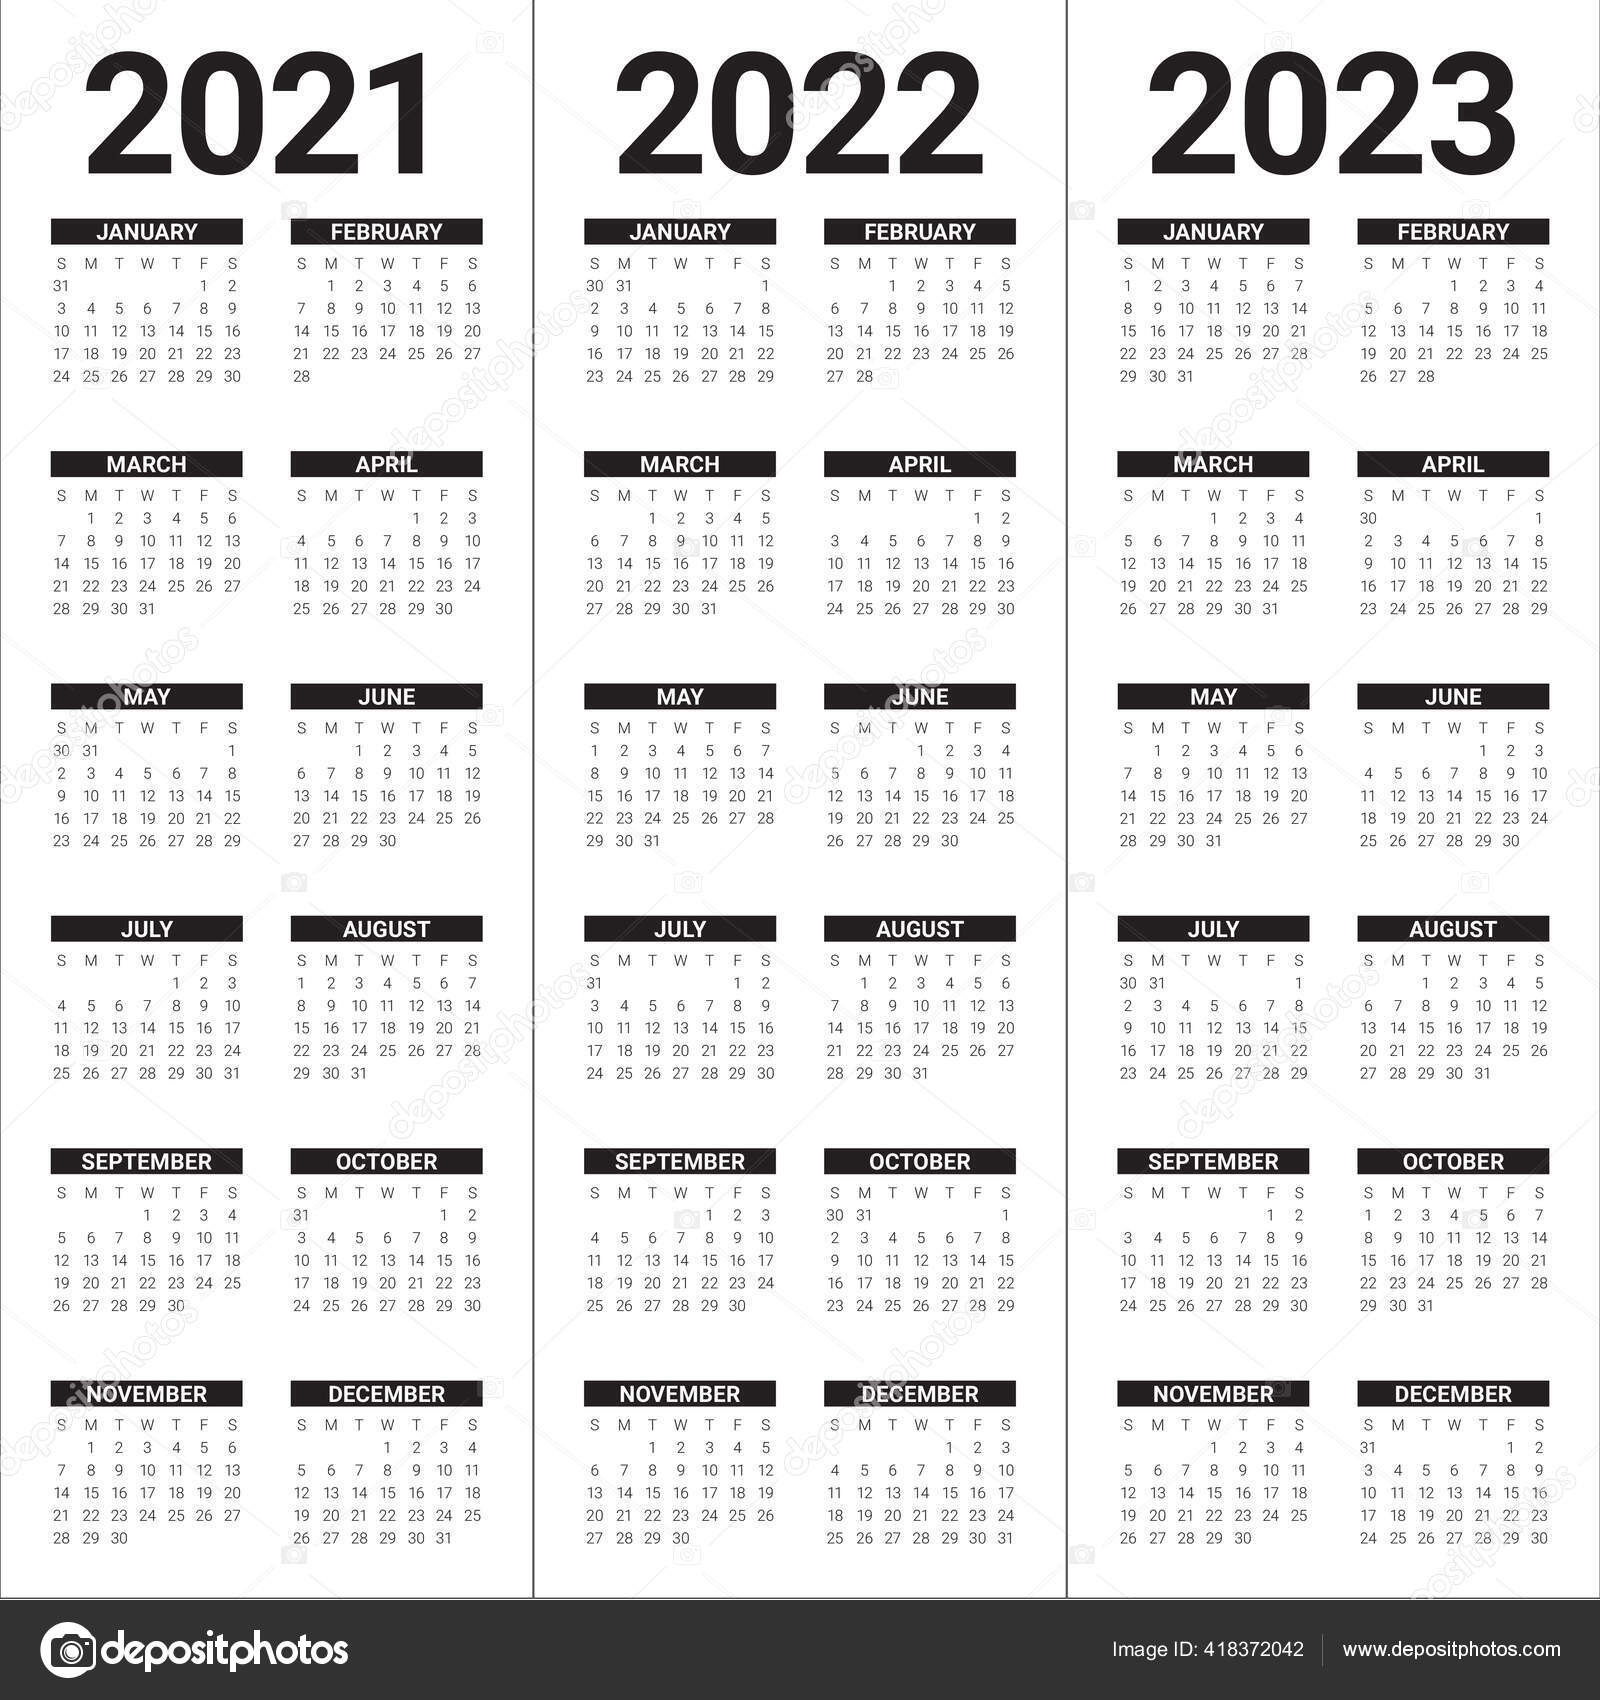 Uc Berkeley 2022 2023 Calendar Year 2021 2022 2023 Calendar Vector Design Template Simple Clean Stock  Vector Image By ©Dolphfynlow #418372042